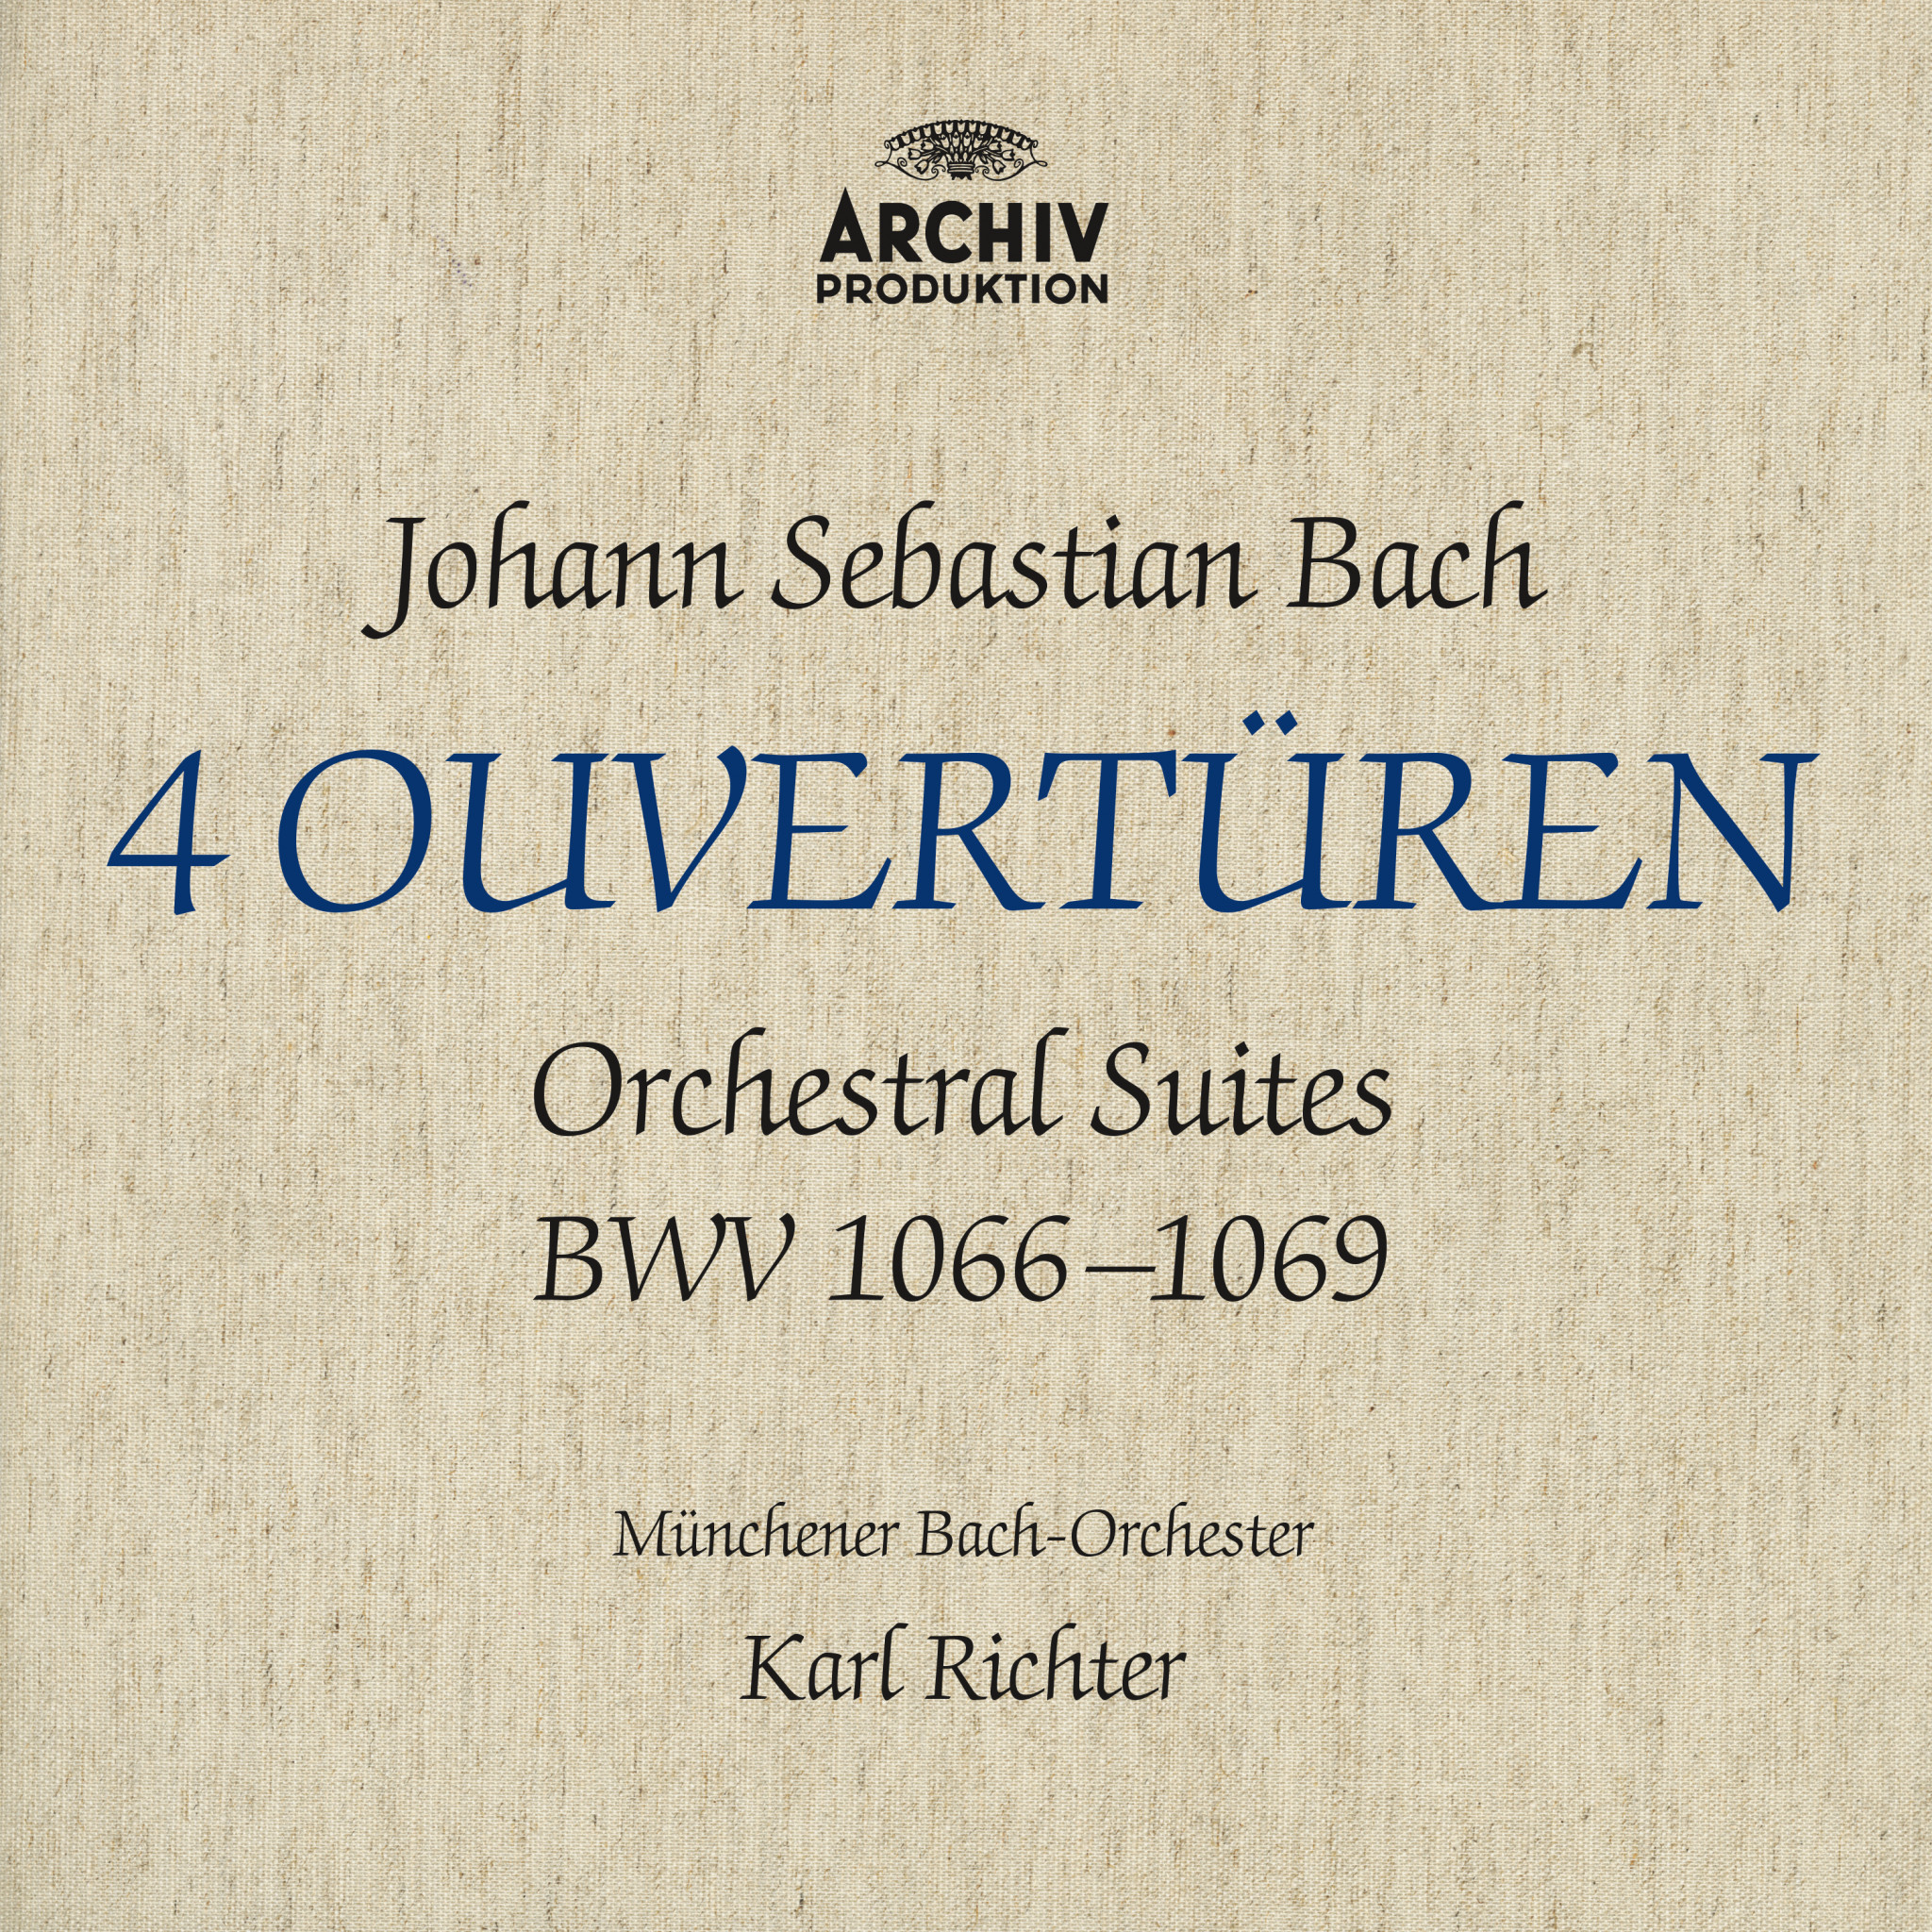 Karl Richter - Bach, J.S.: Orchestral Suites, BWV 1066-1069 cover